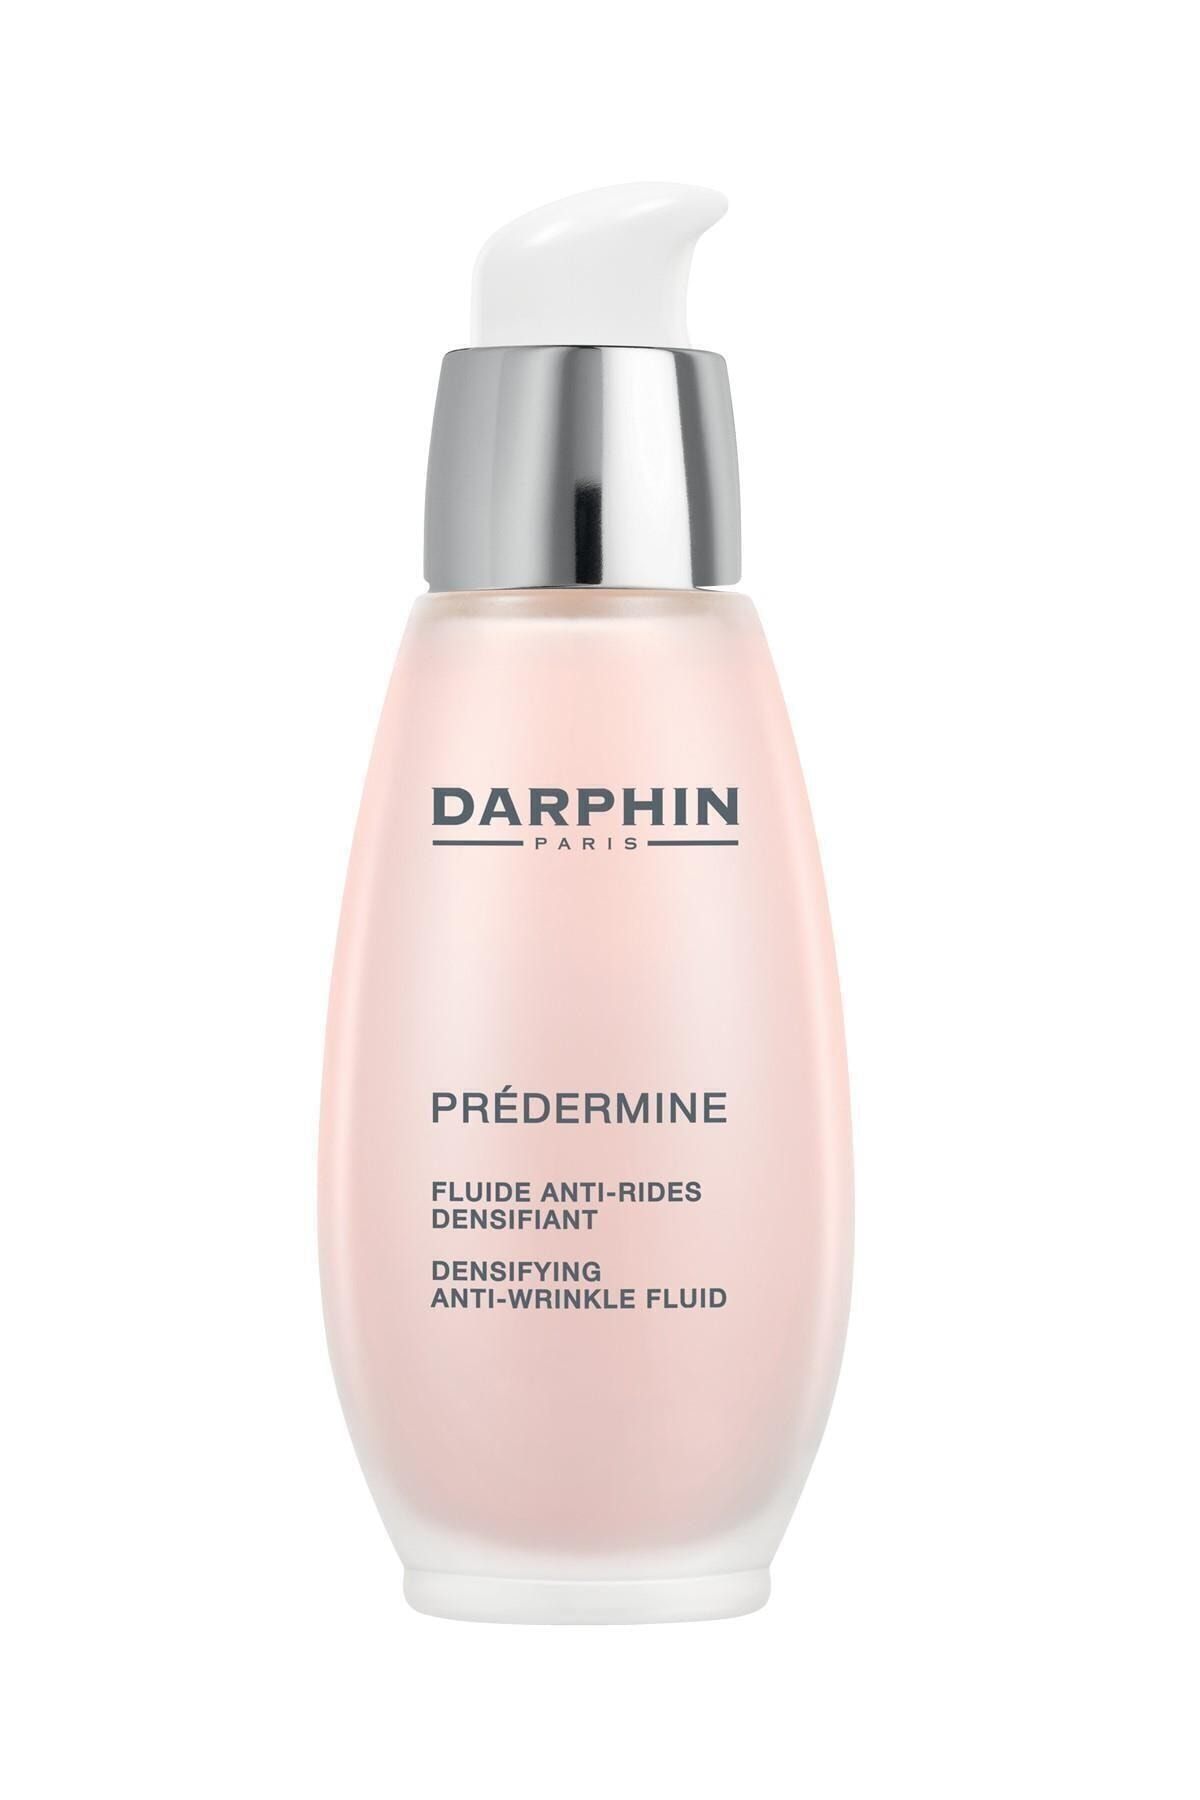 Darphin Predermine Densifying Anti-wrinkle Fluid 50 ml (KUTUSUZ)